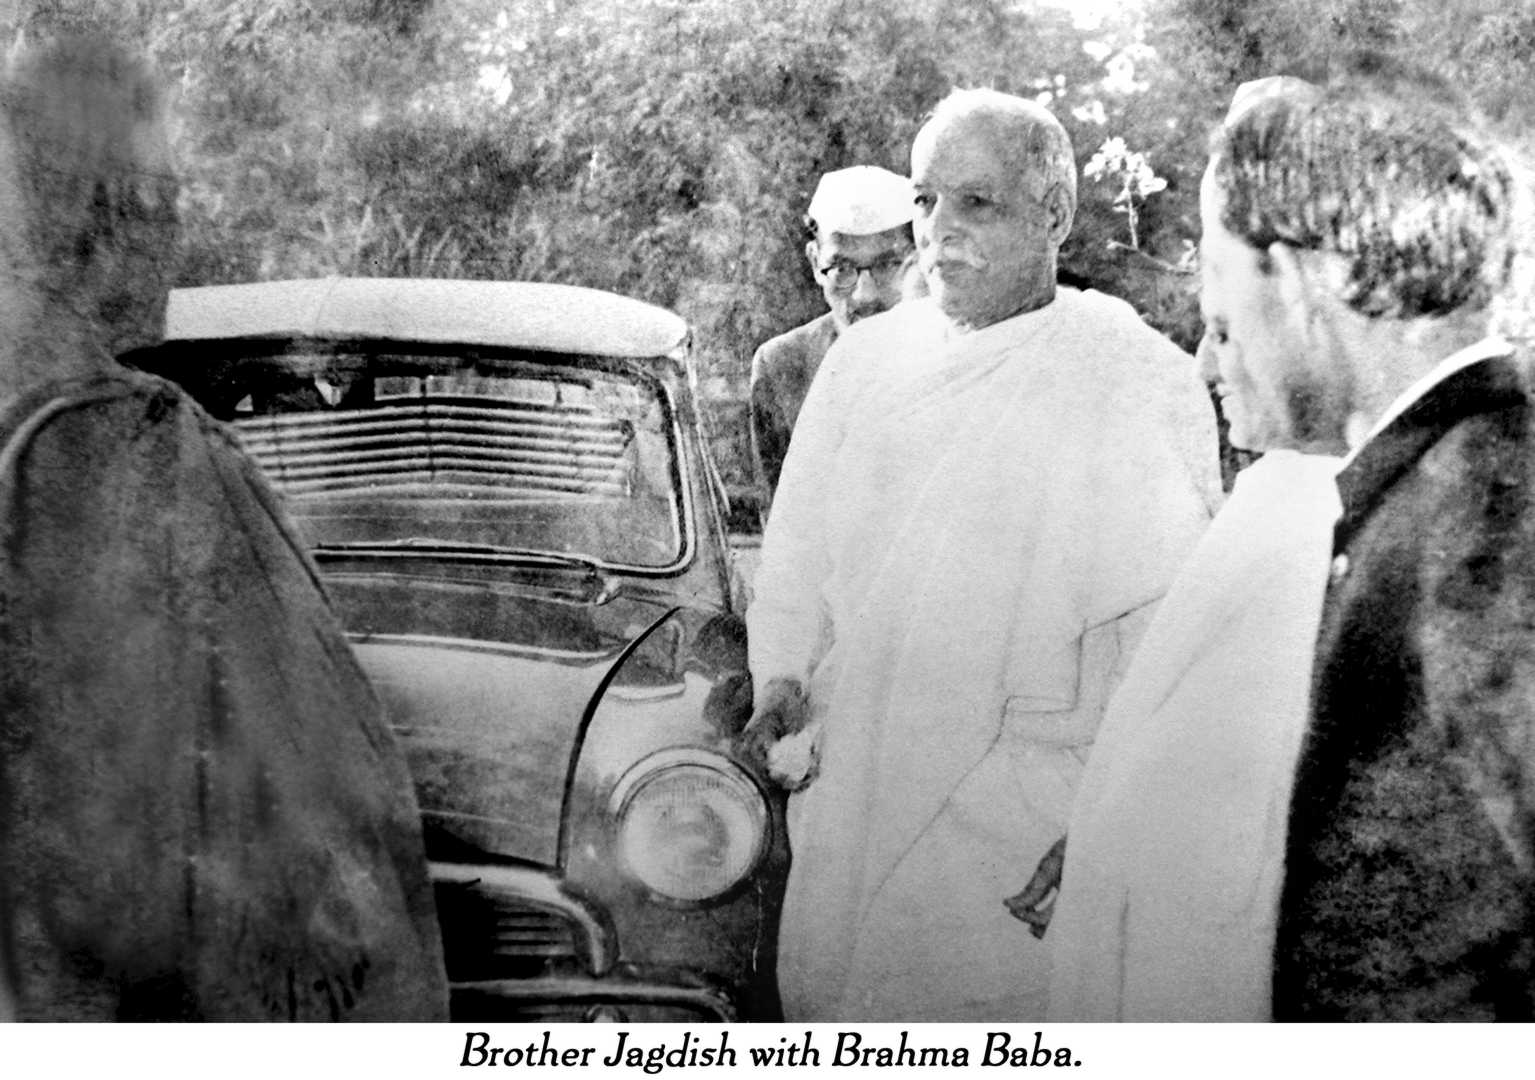 Brahma baba with jagdish bhai